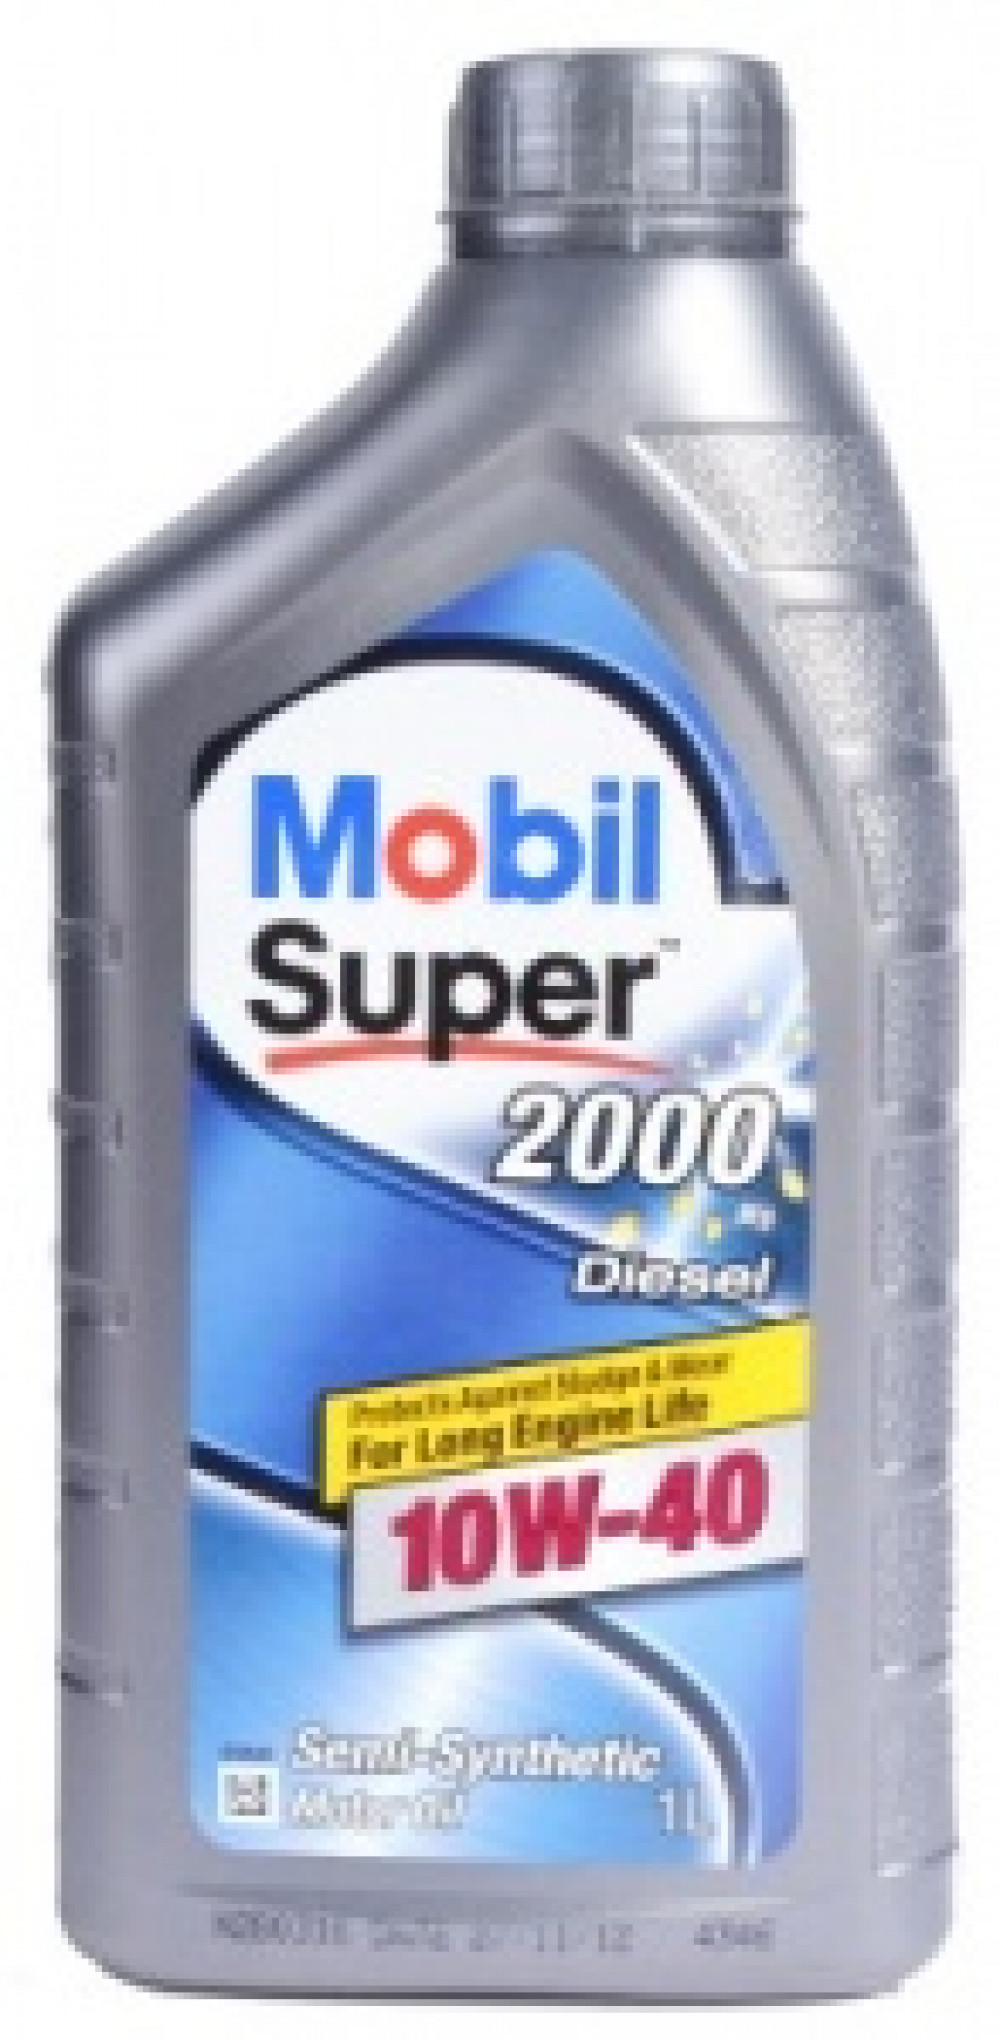 Мобил супер 10w 40. Мобил супер 2000 дизель 10w 40. Масло моторное "mobil super" (2000) 10w40 (4 л). Моторное масло мобил 2000 10w 40. Моторное масло mobil super 2000 x1 Diesel 10w-40 1 л.